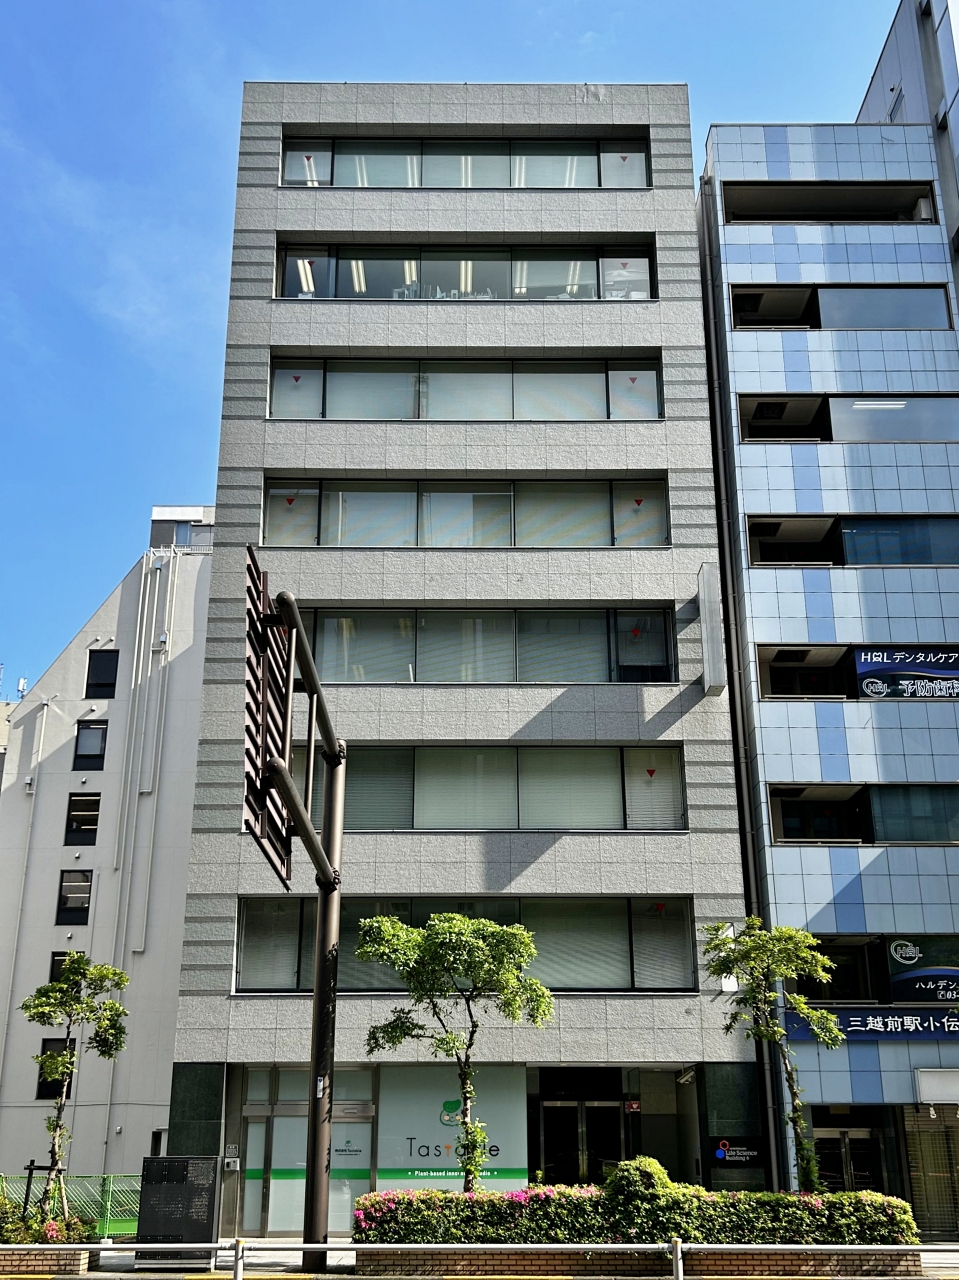 Nihonbashi Life Science Building 6